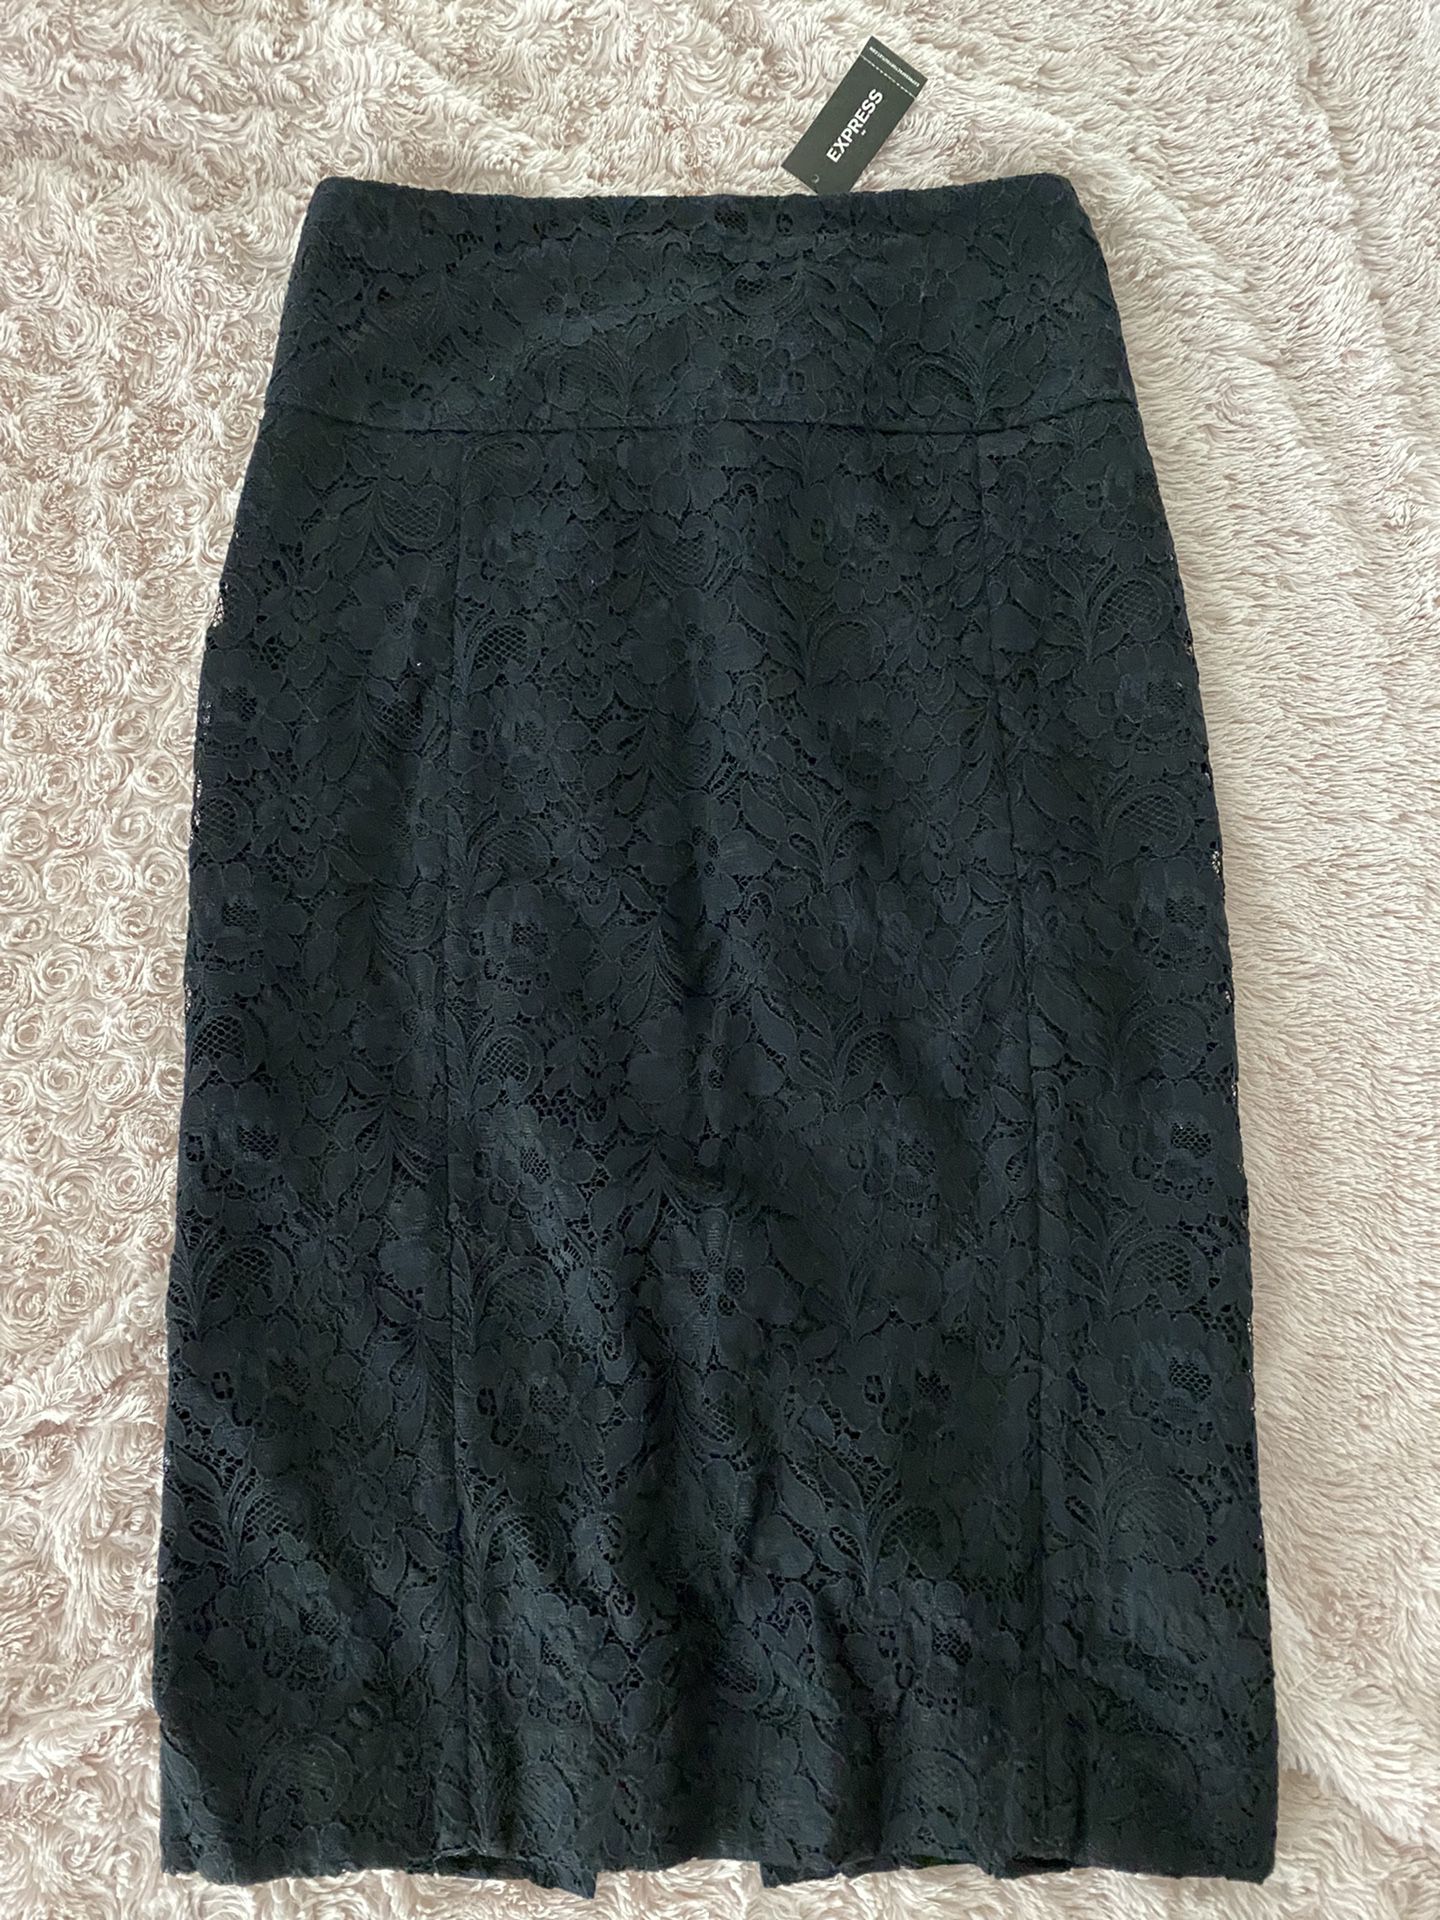 Express Black lace pencil skirt